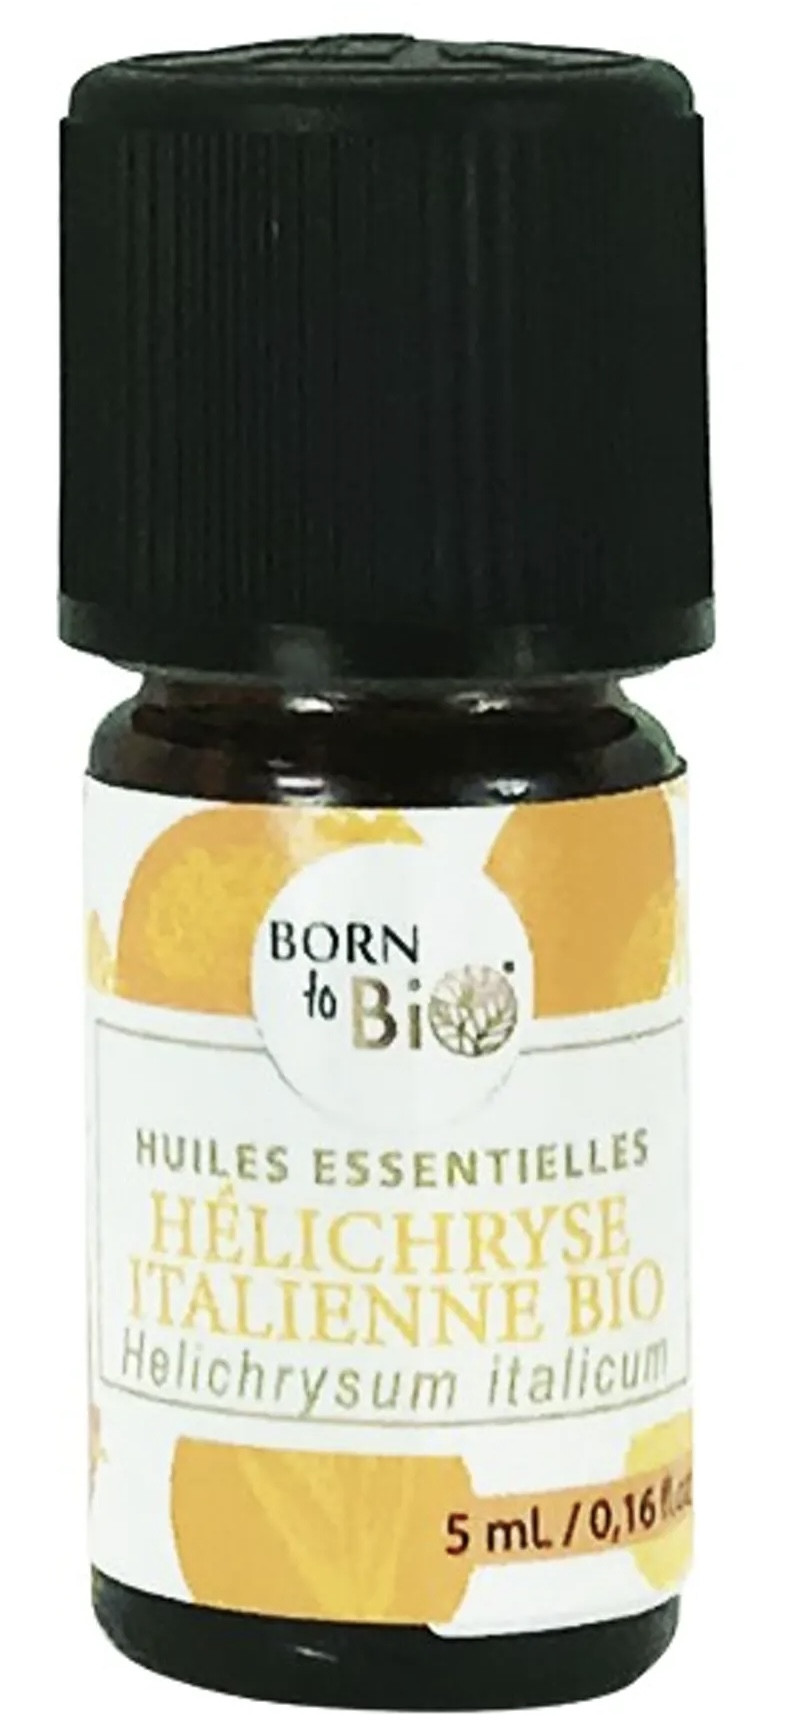 Hélichryse italienne - Huile essentielle bio - 5 ml